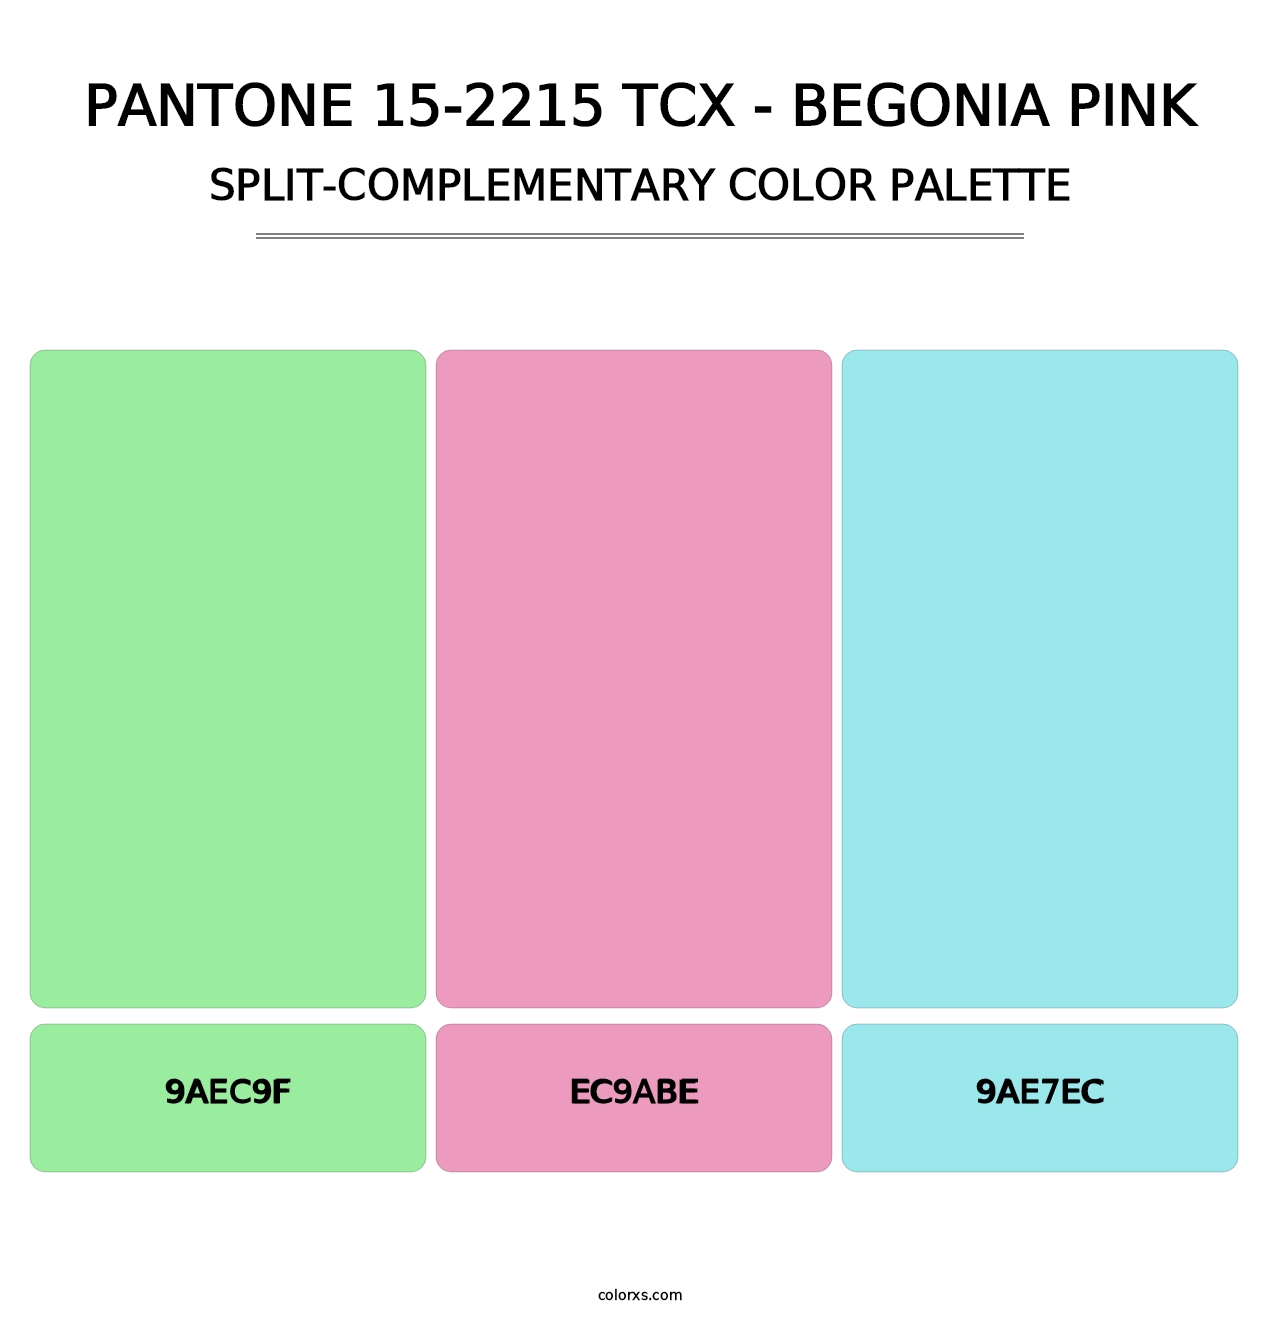 PANTONE 15-2215 TCX - Begonia Pink - Split-Complementary Color Palette